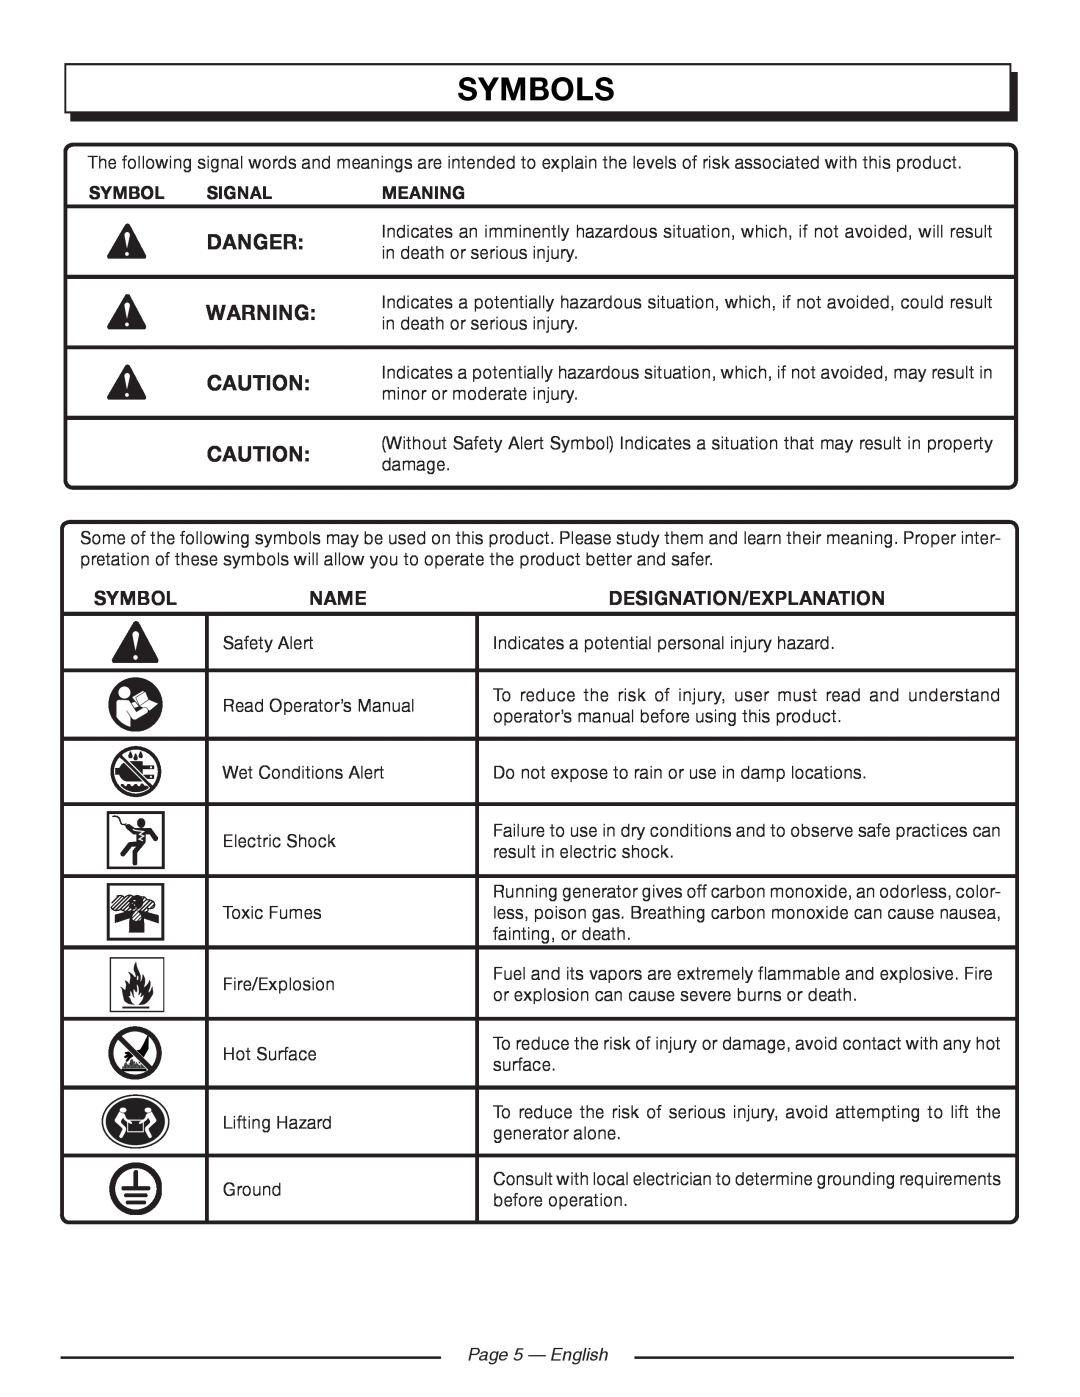 Homelite HGCA5000 manuel dutilisation Symbols, Name, Designation/Explanation, Signal, Meaning, Page 5 - English, Danger 